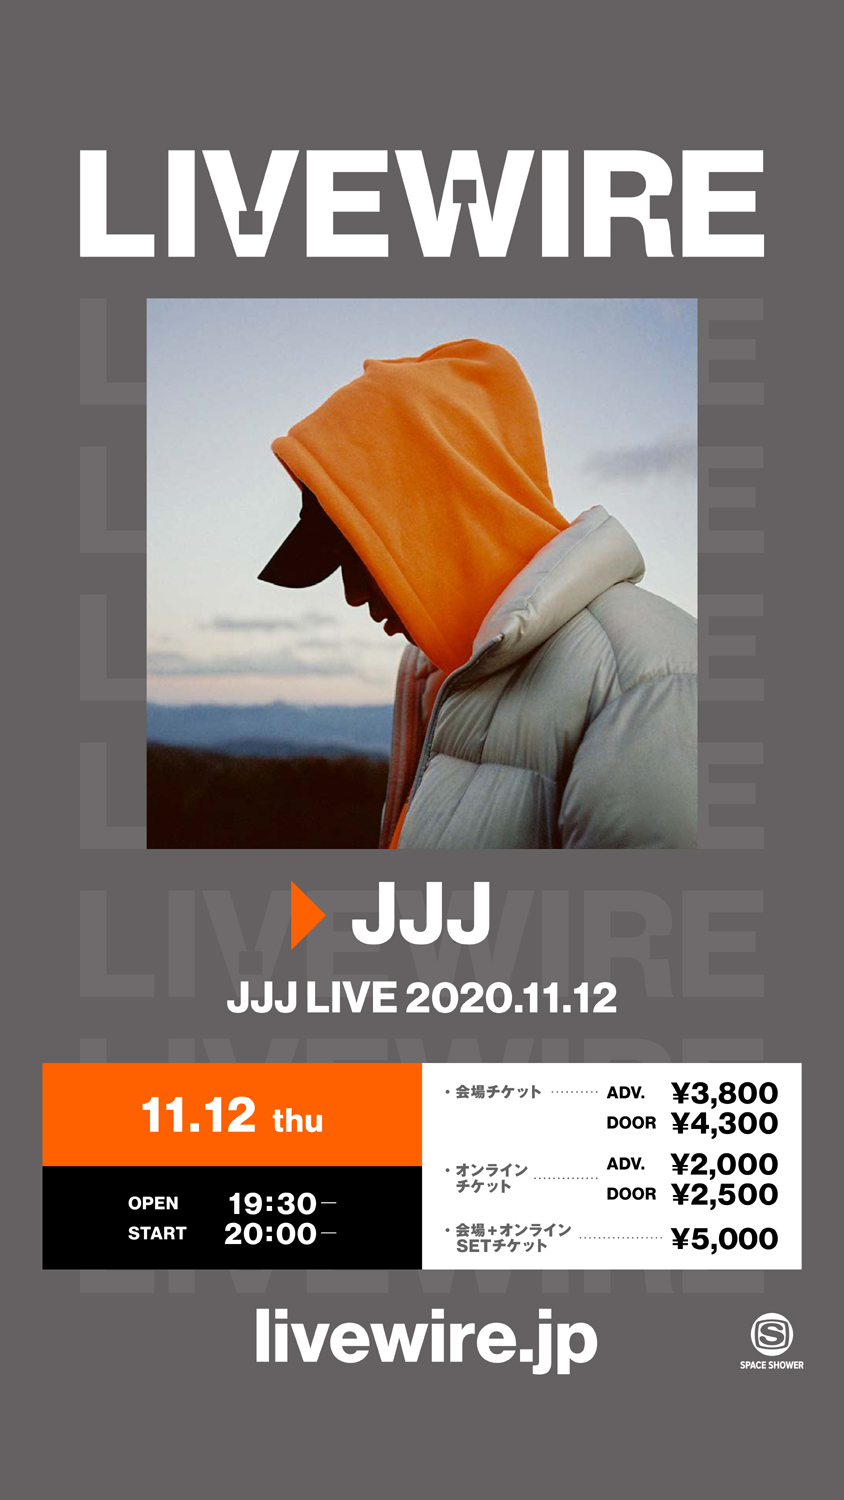 JJJ LIVE 2020.11.12 at 恵比寿LIQUIDROOM